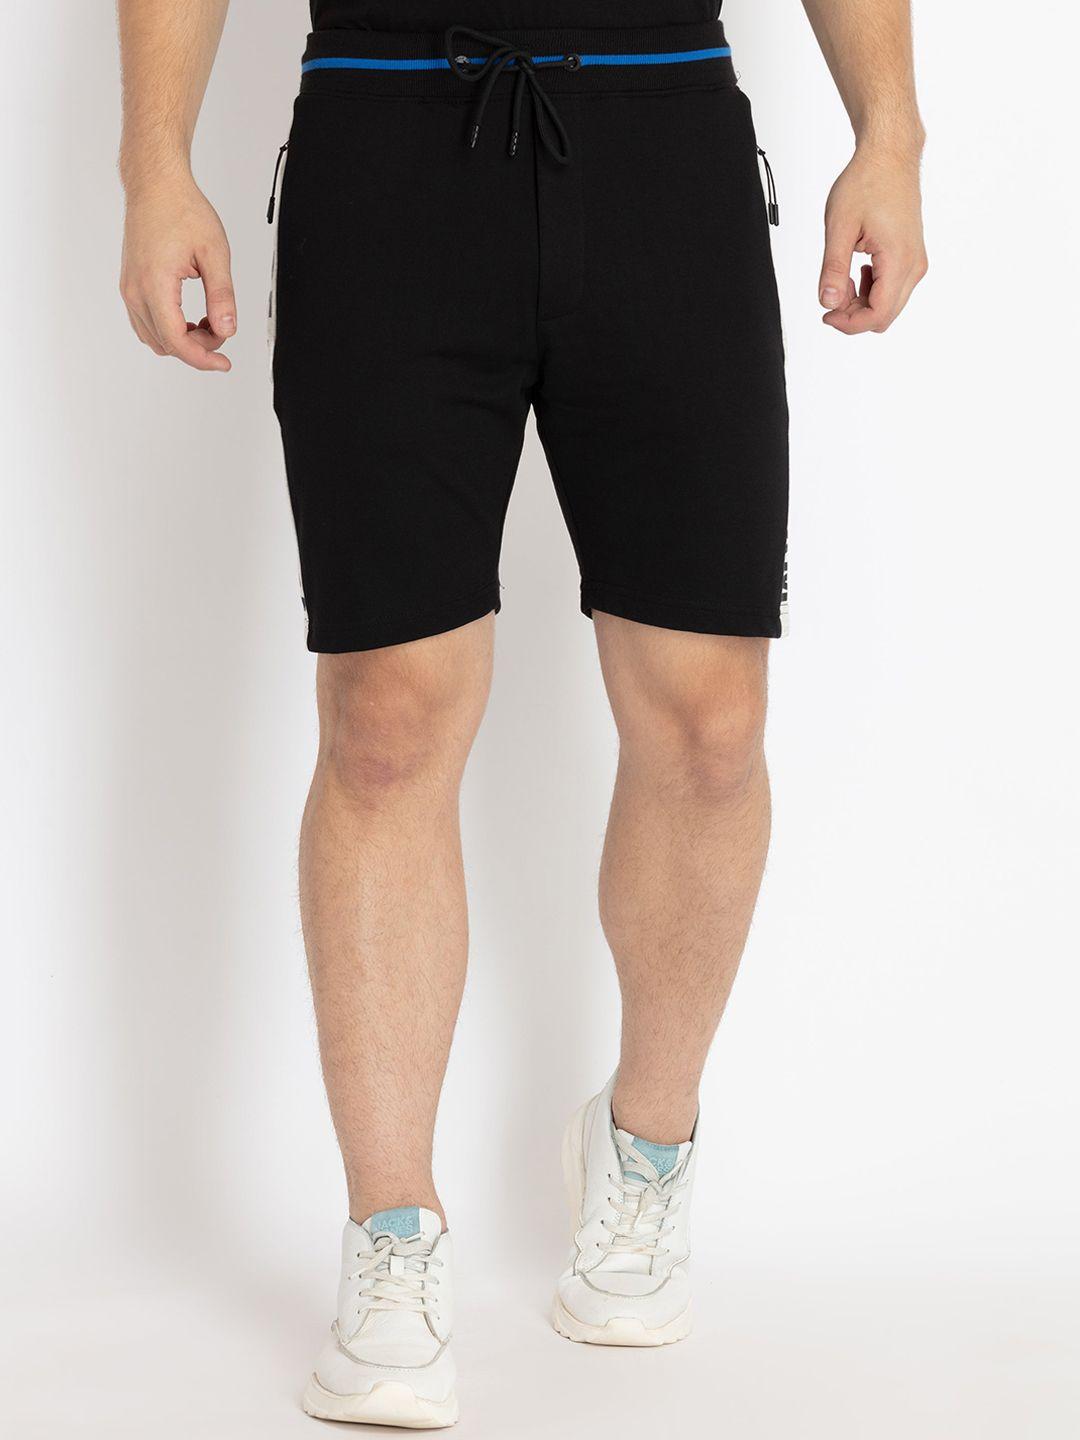 status quo men printed regular fit mid-rise shorts